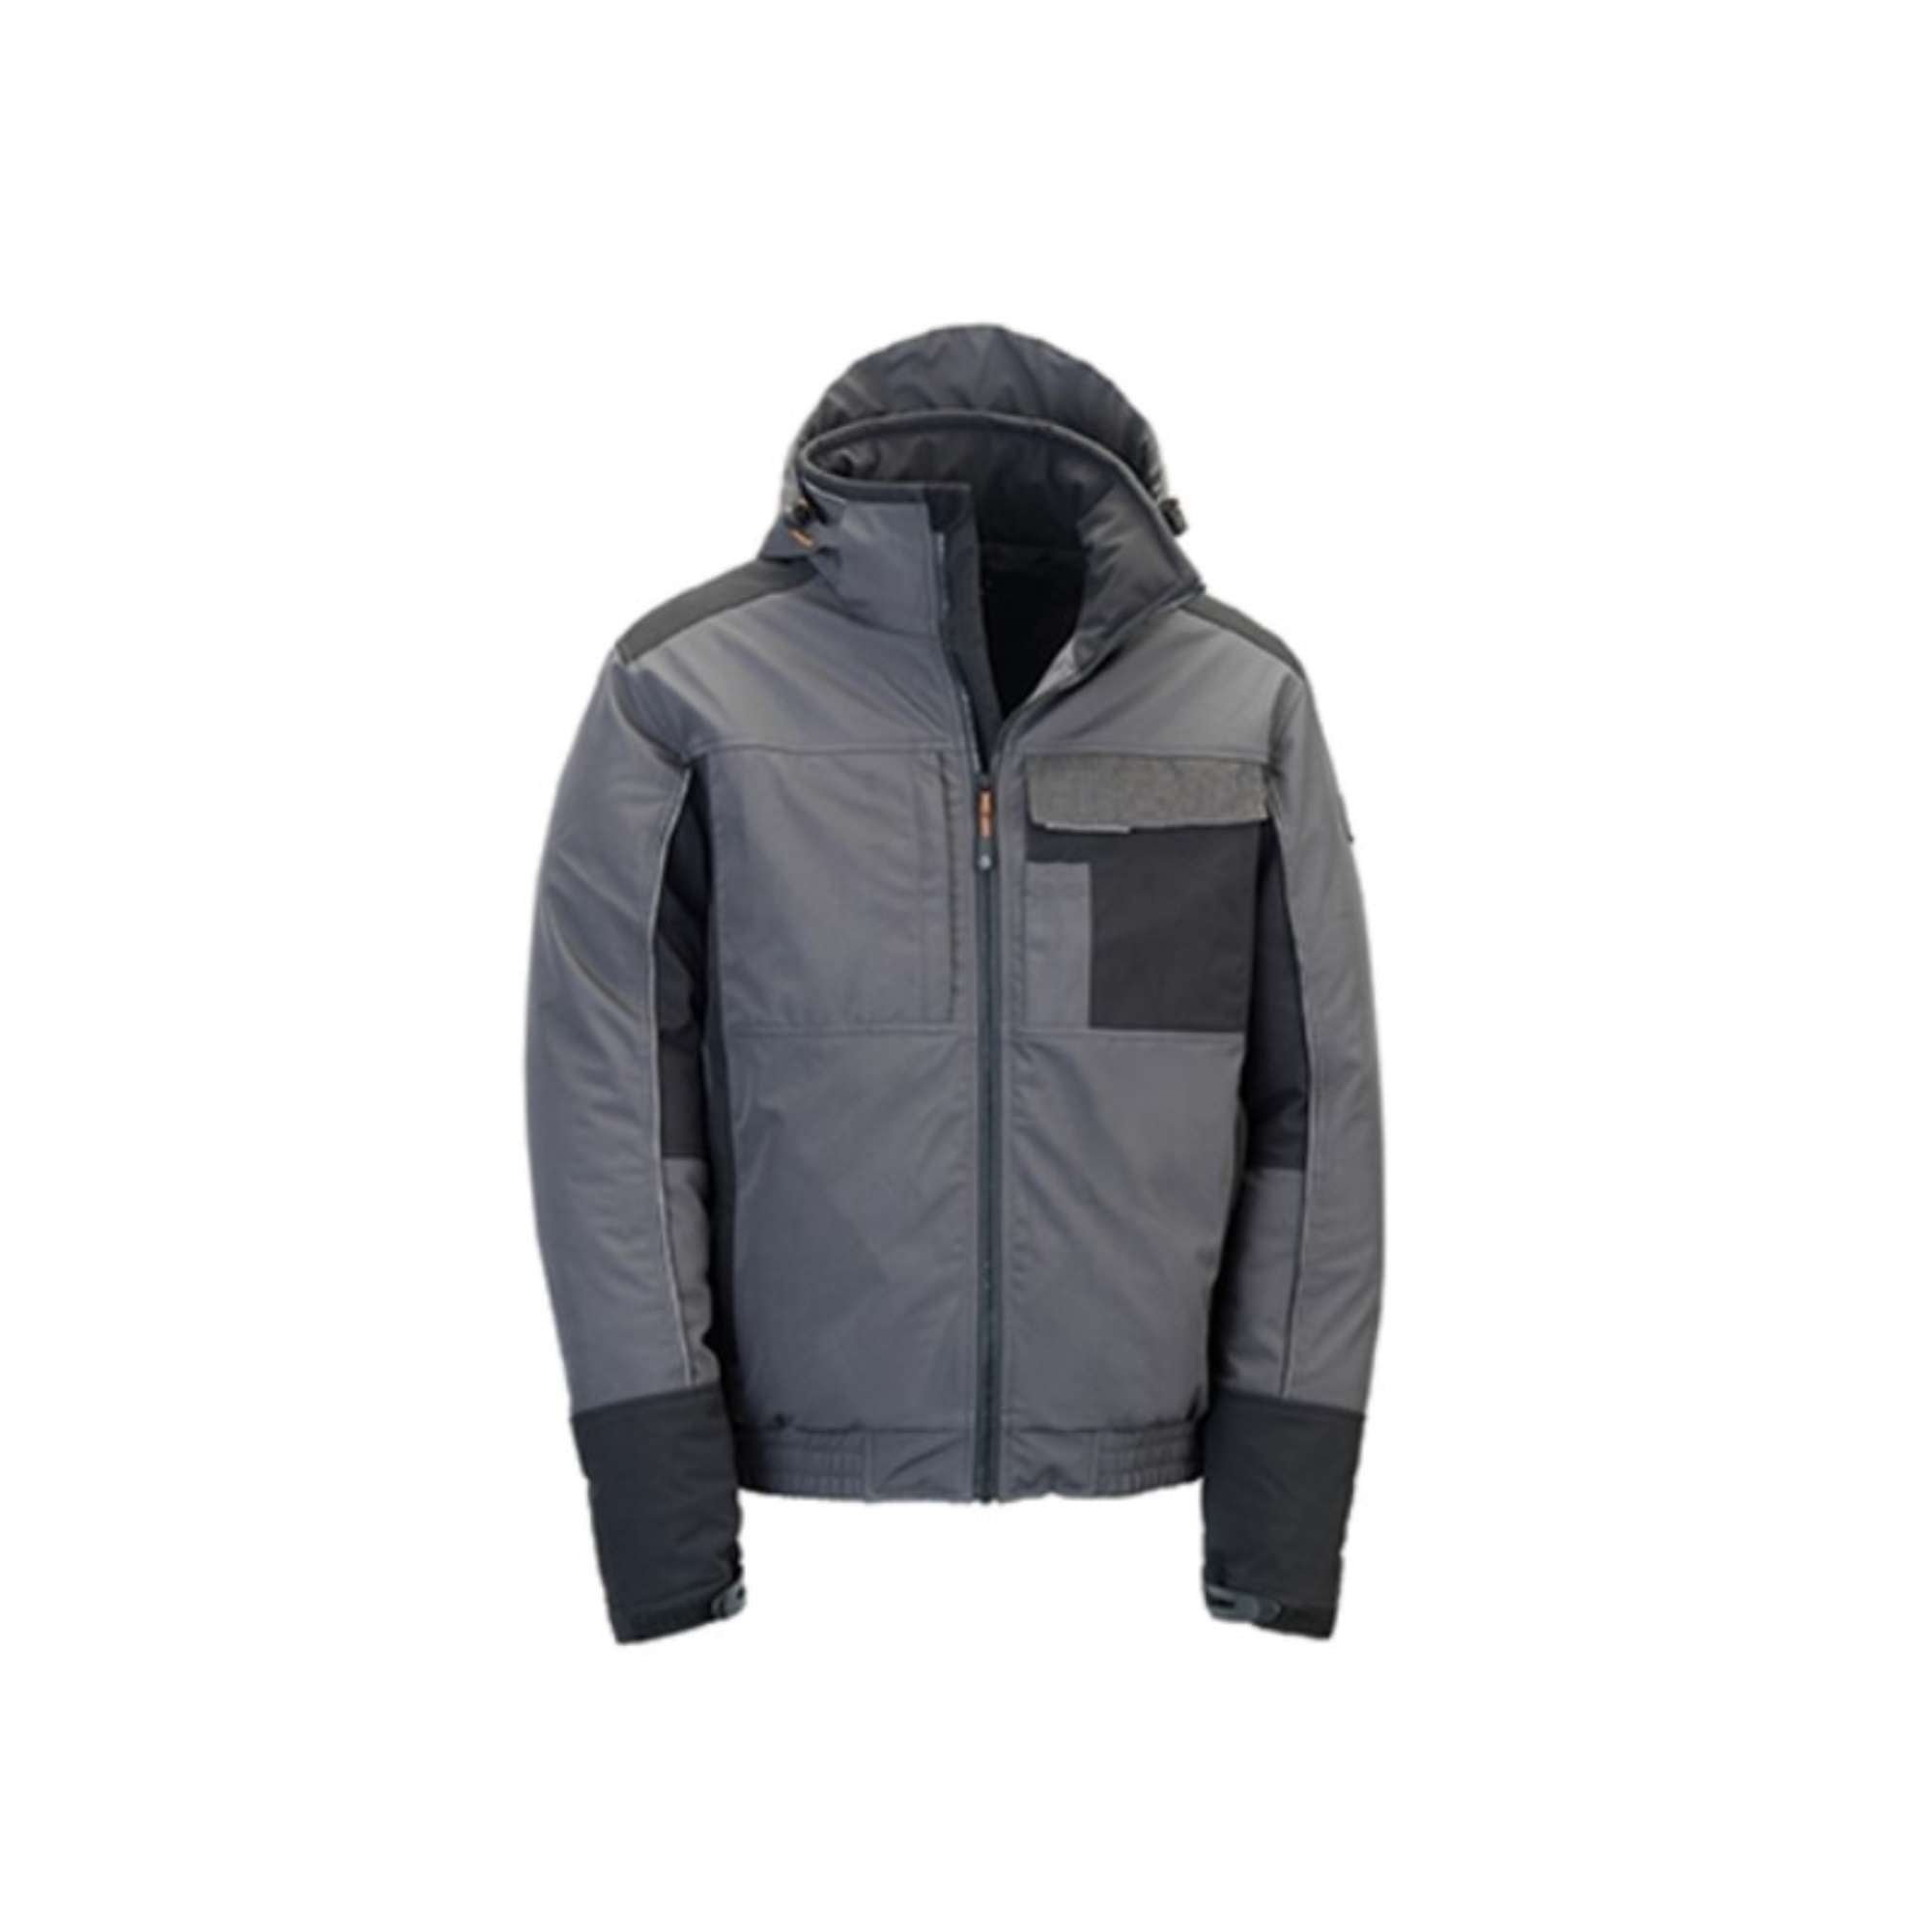 Jacket TENERE PRO grey/black SIZE S/M/L - 32412/3/4 Kapriol